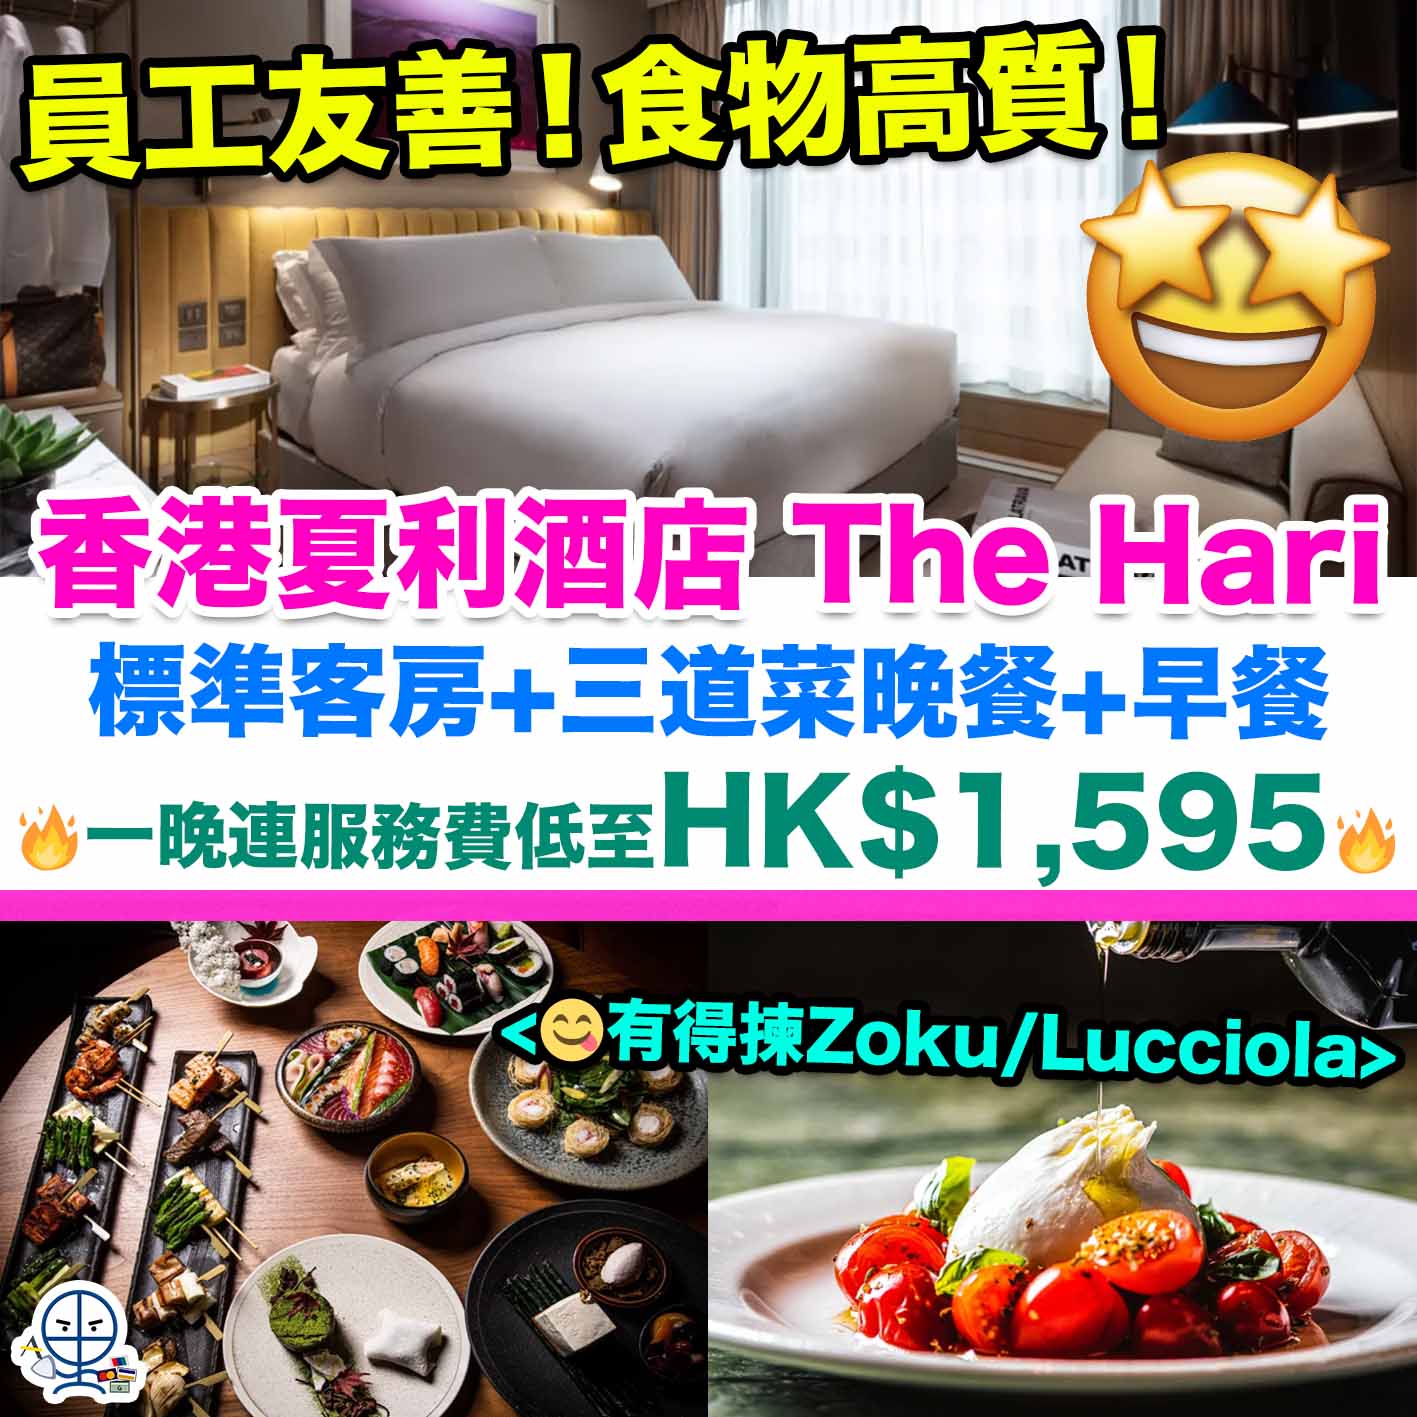 The Hari香港夏利酒店,staycation, hotel staycation，本地旅遊，酒店住宿優惠